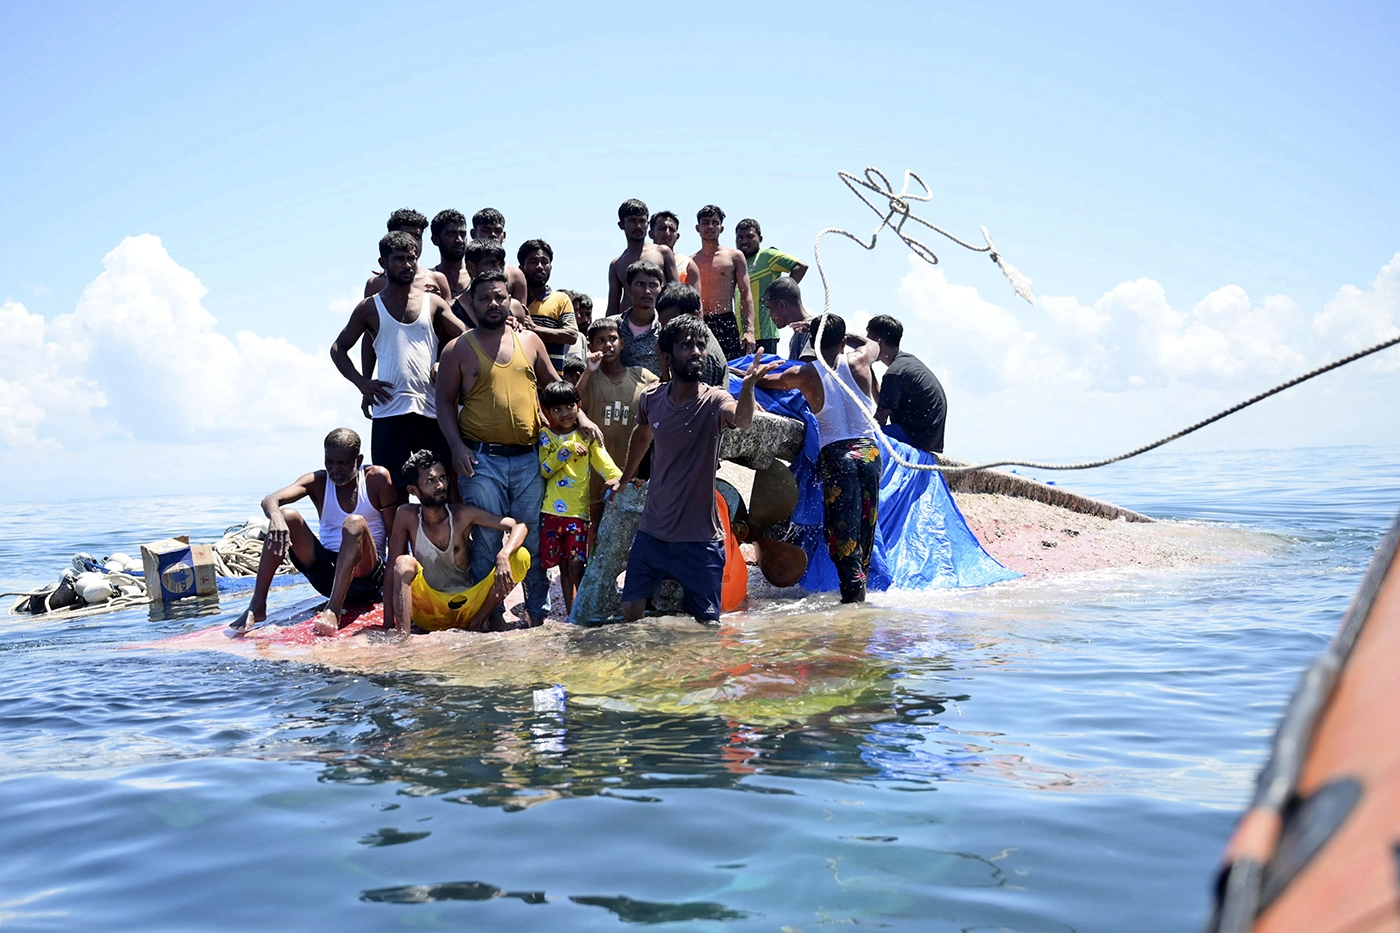 Беженцы рохинджа ожидают помощи на опрокинутой лодке. Фото дня